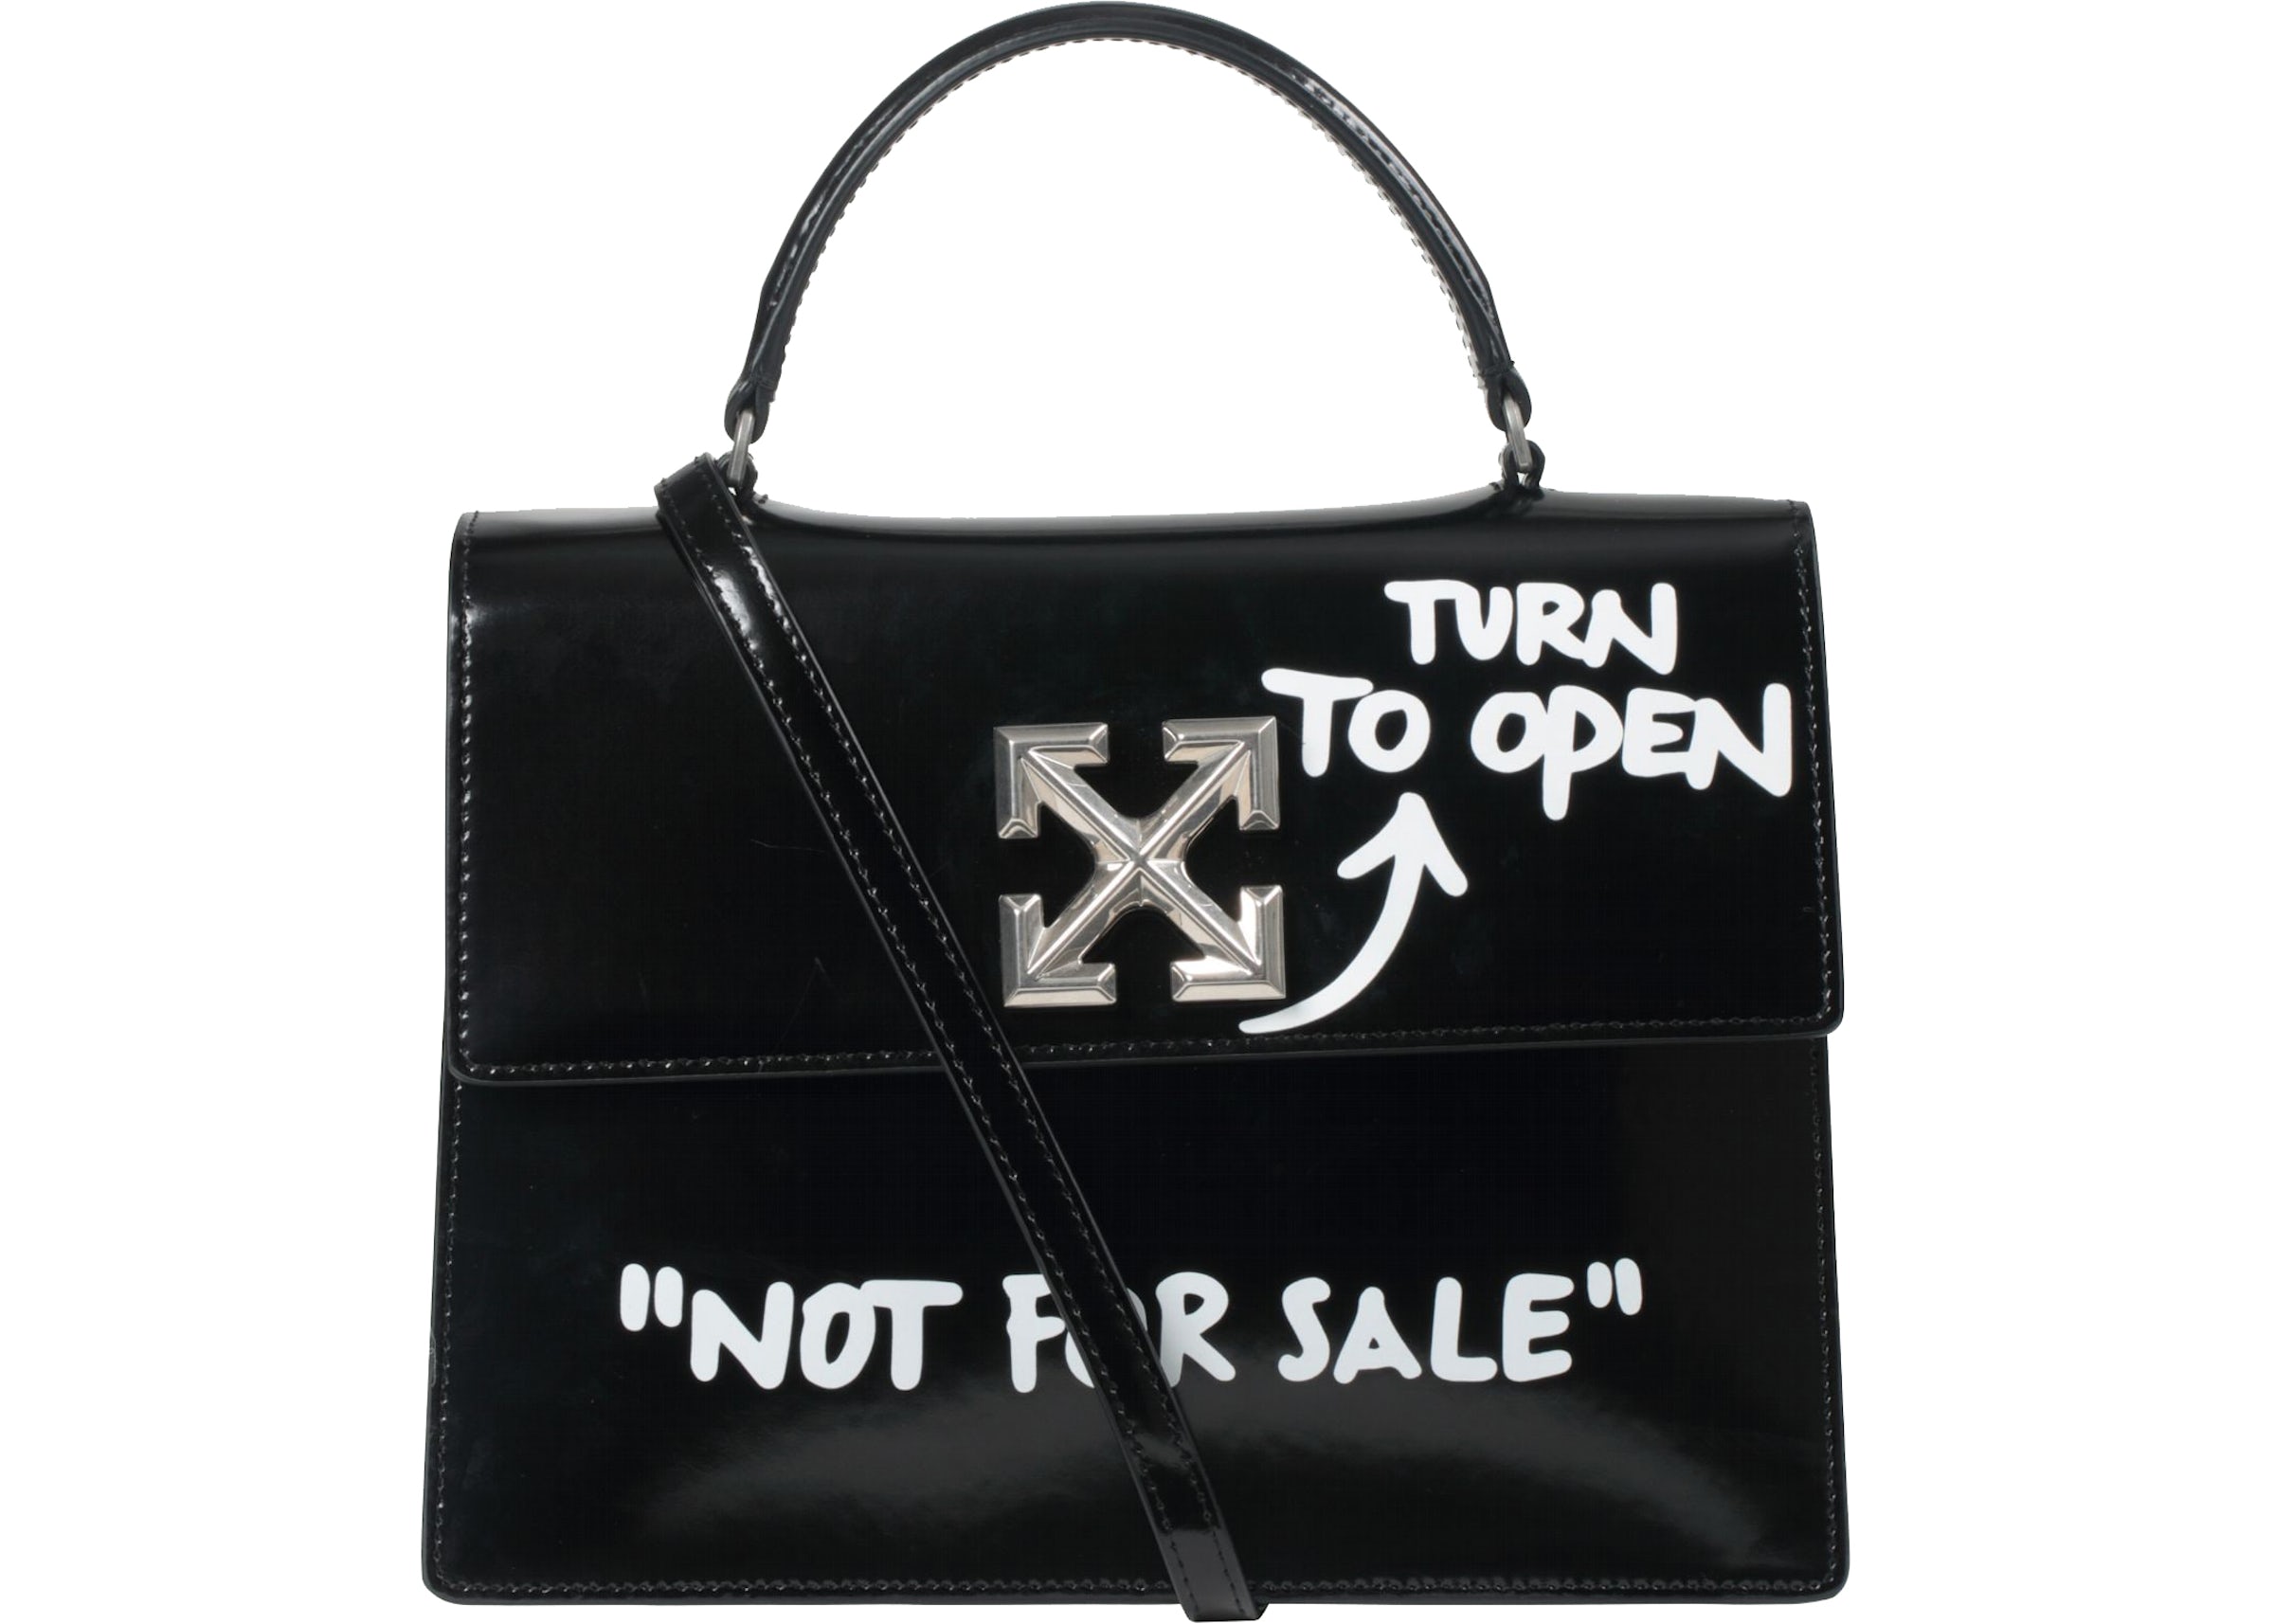 Sell Handbags For Cash NYC